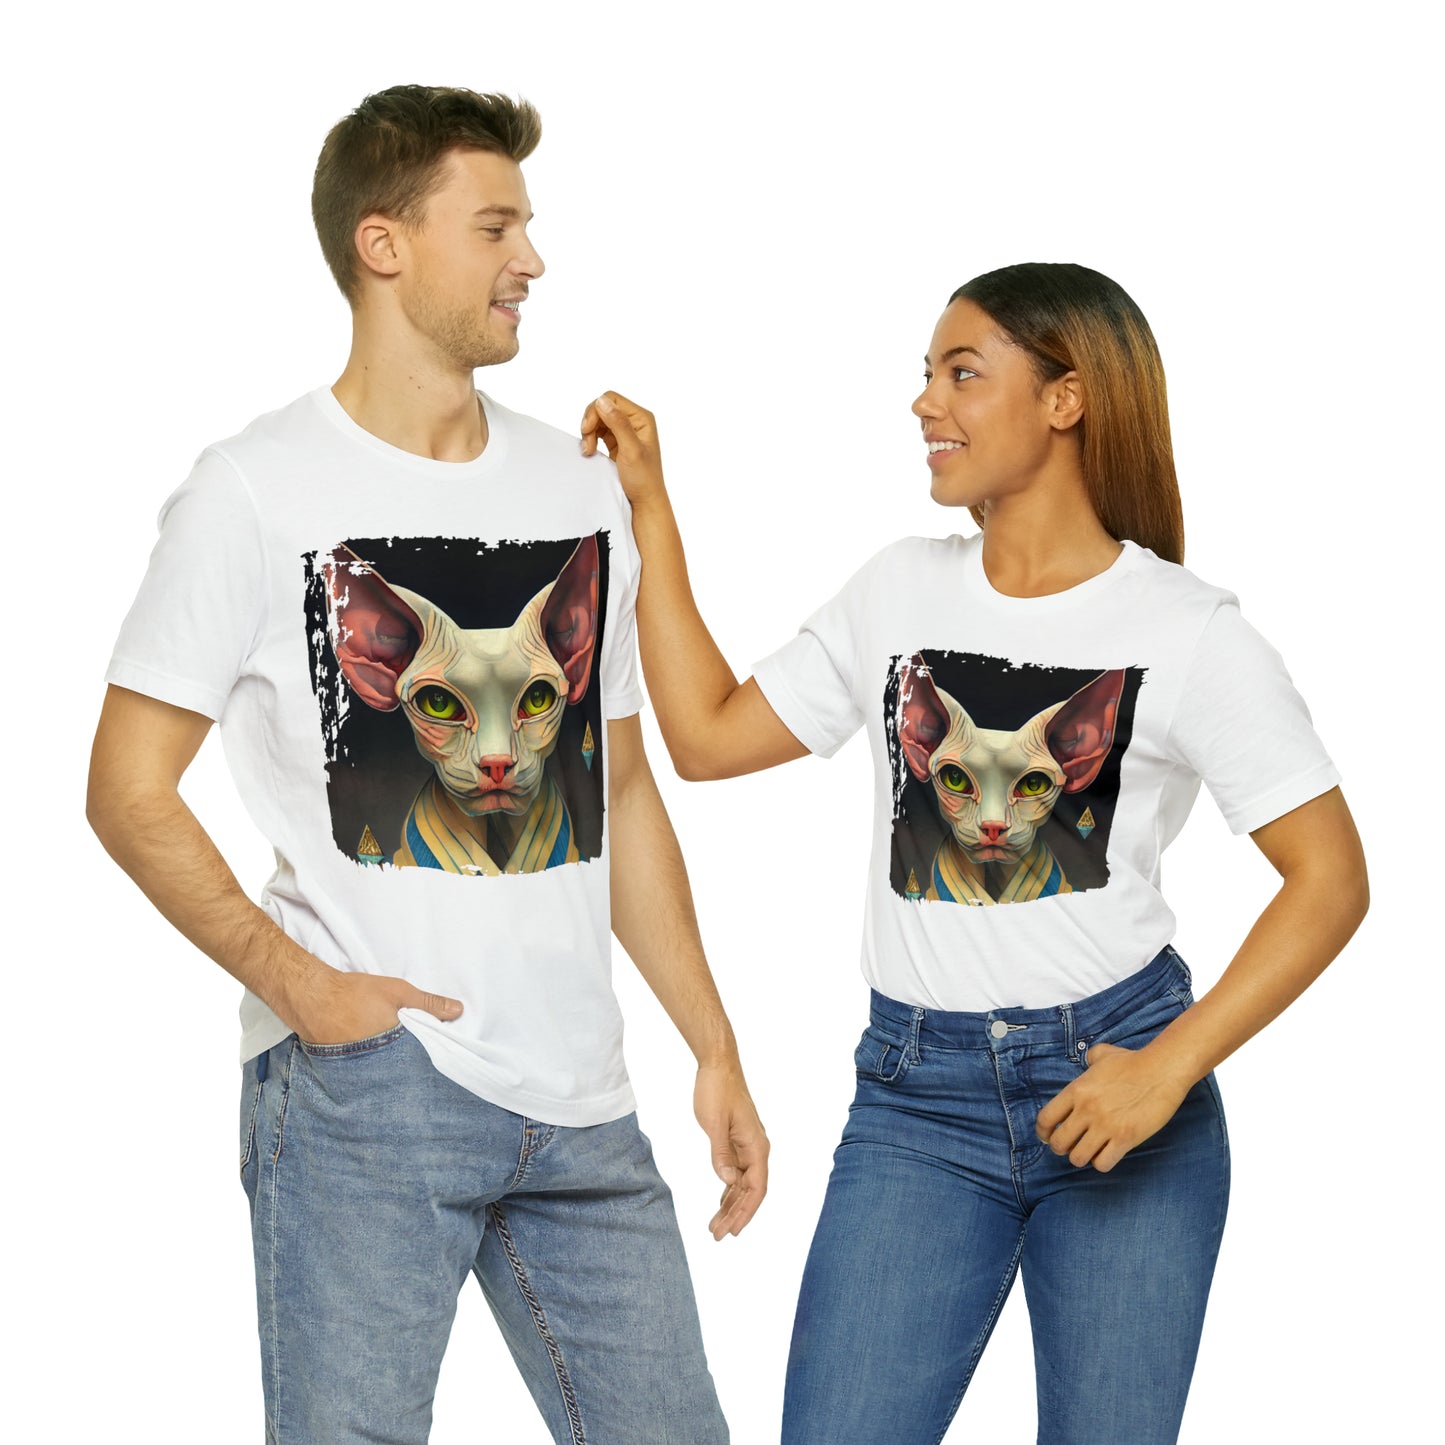 Sphynx Cat T Shirt